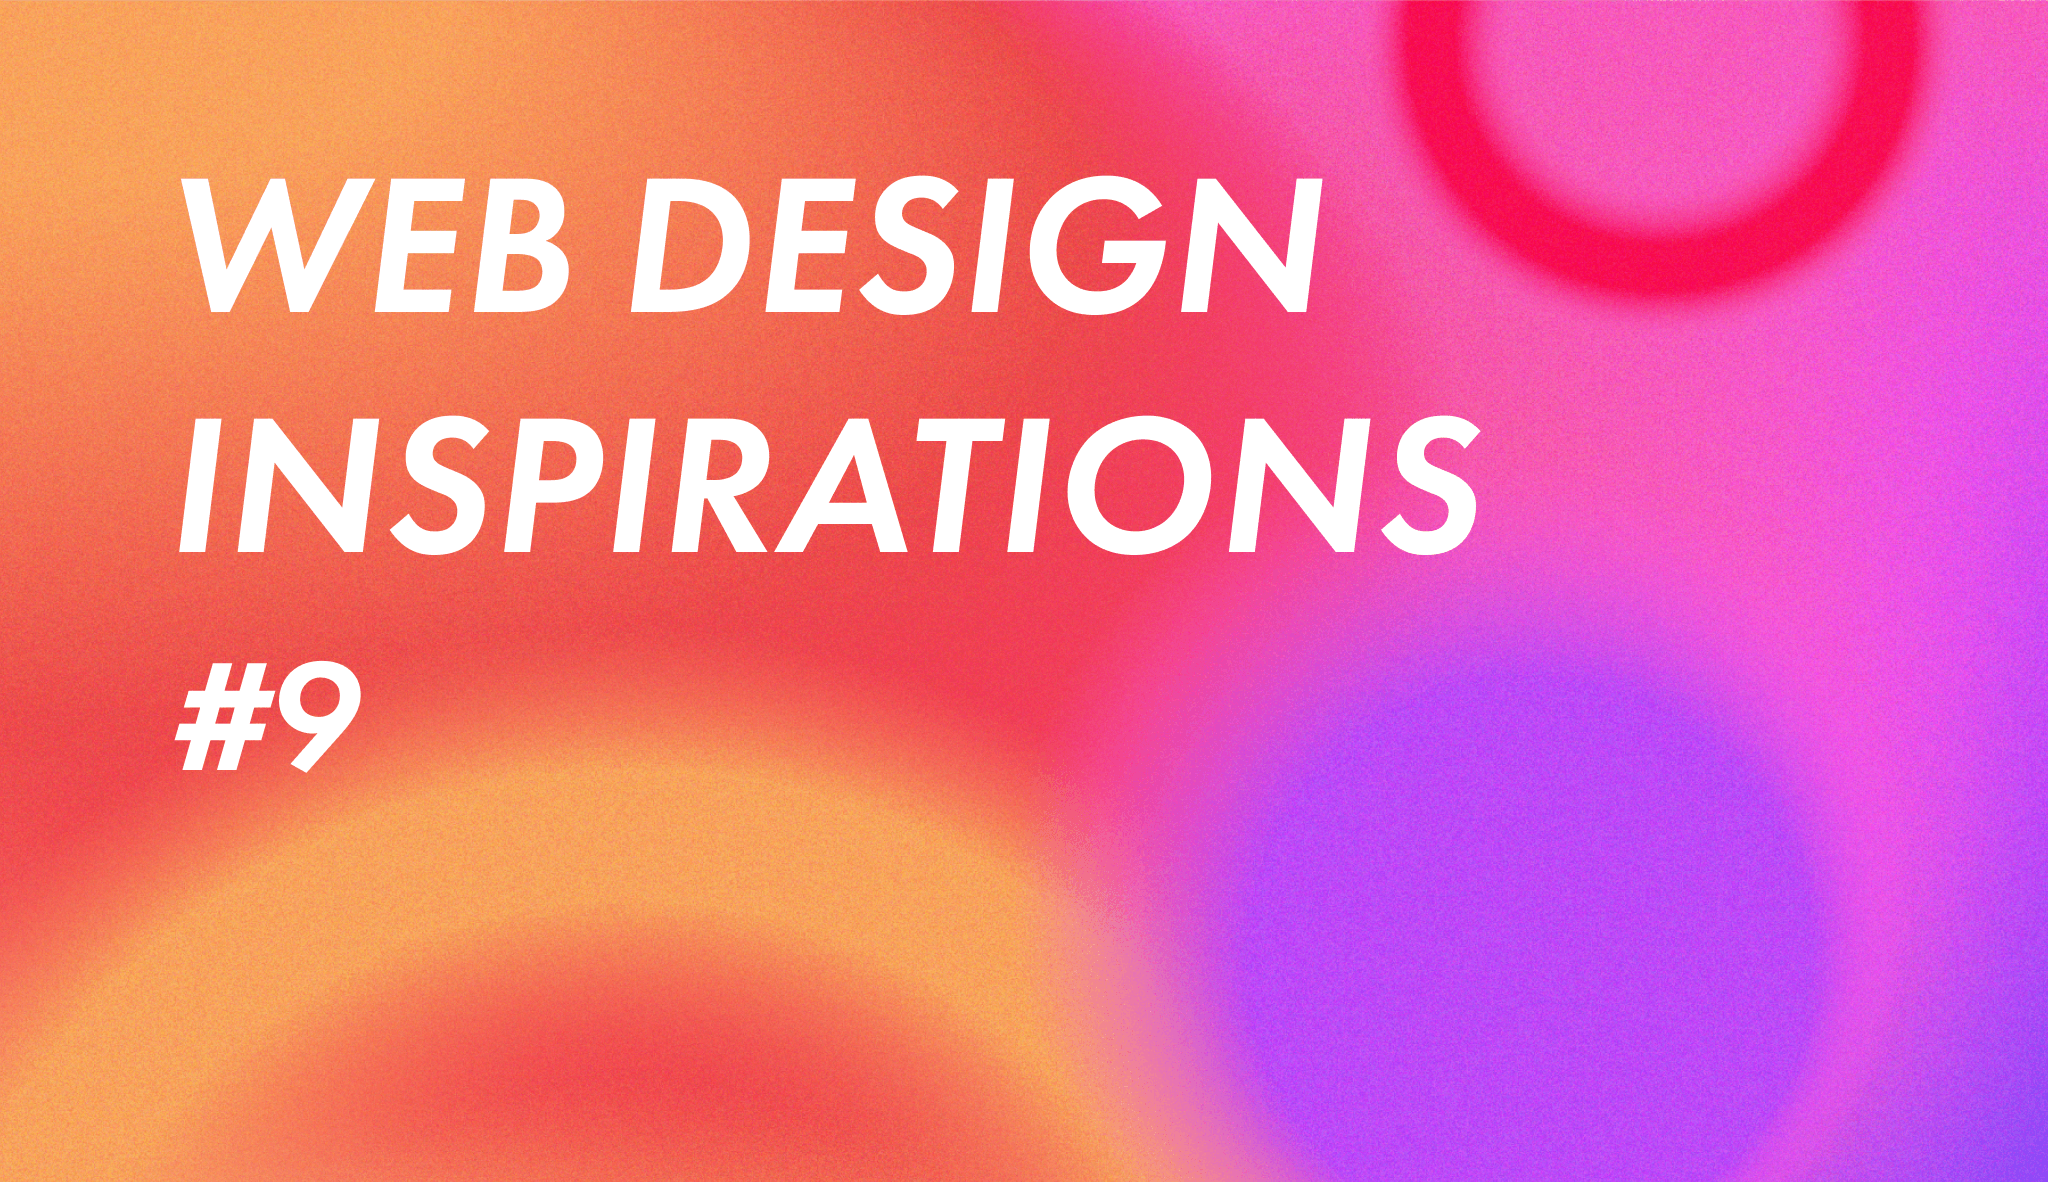 Web Design Inspirations #9